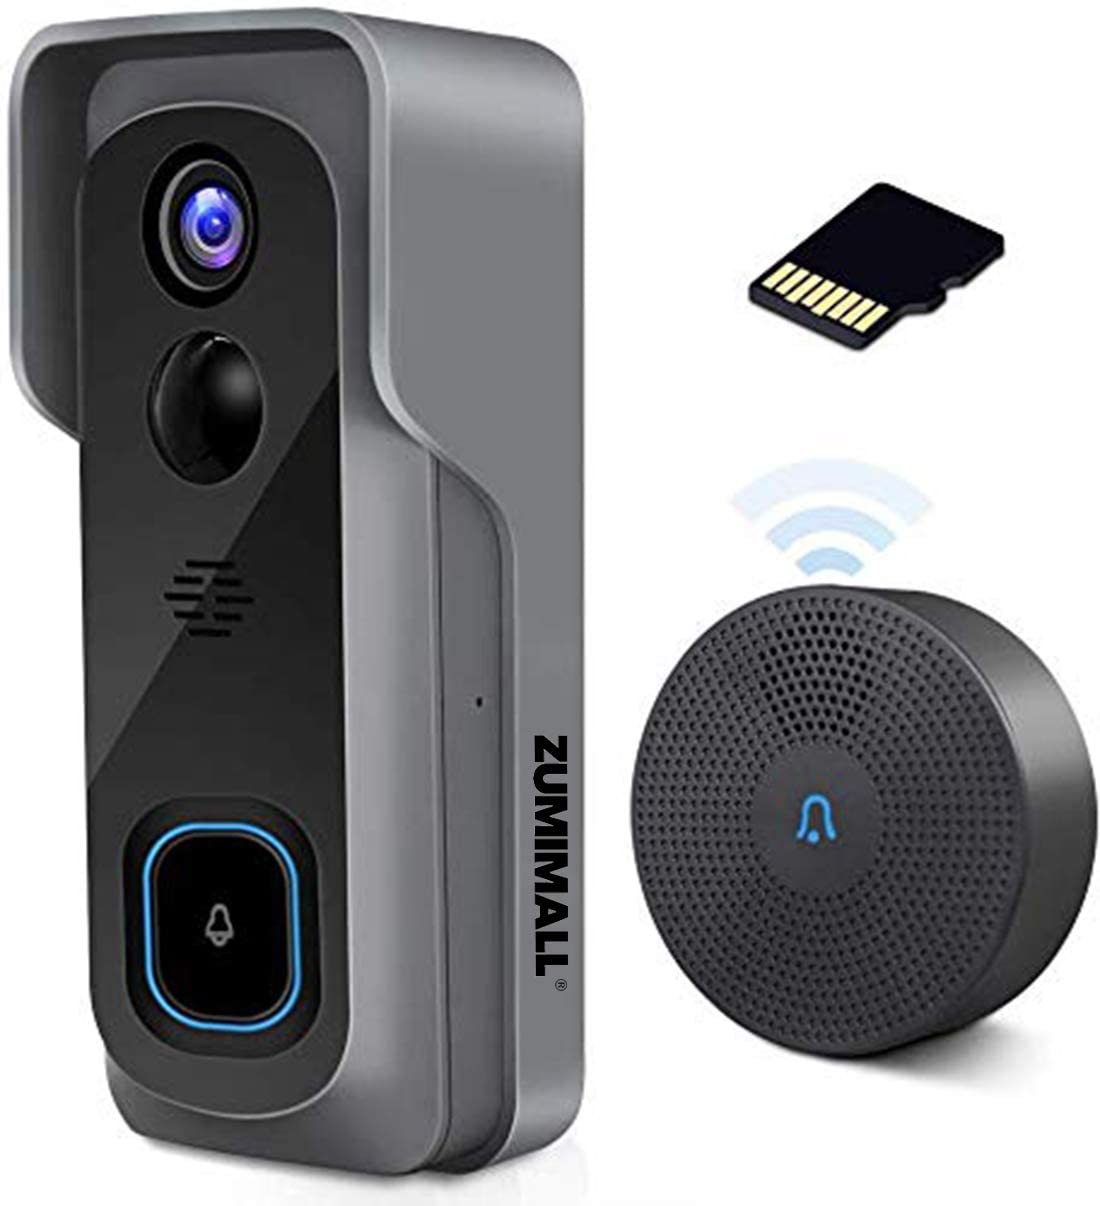 Zumimall Video Doorbell